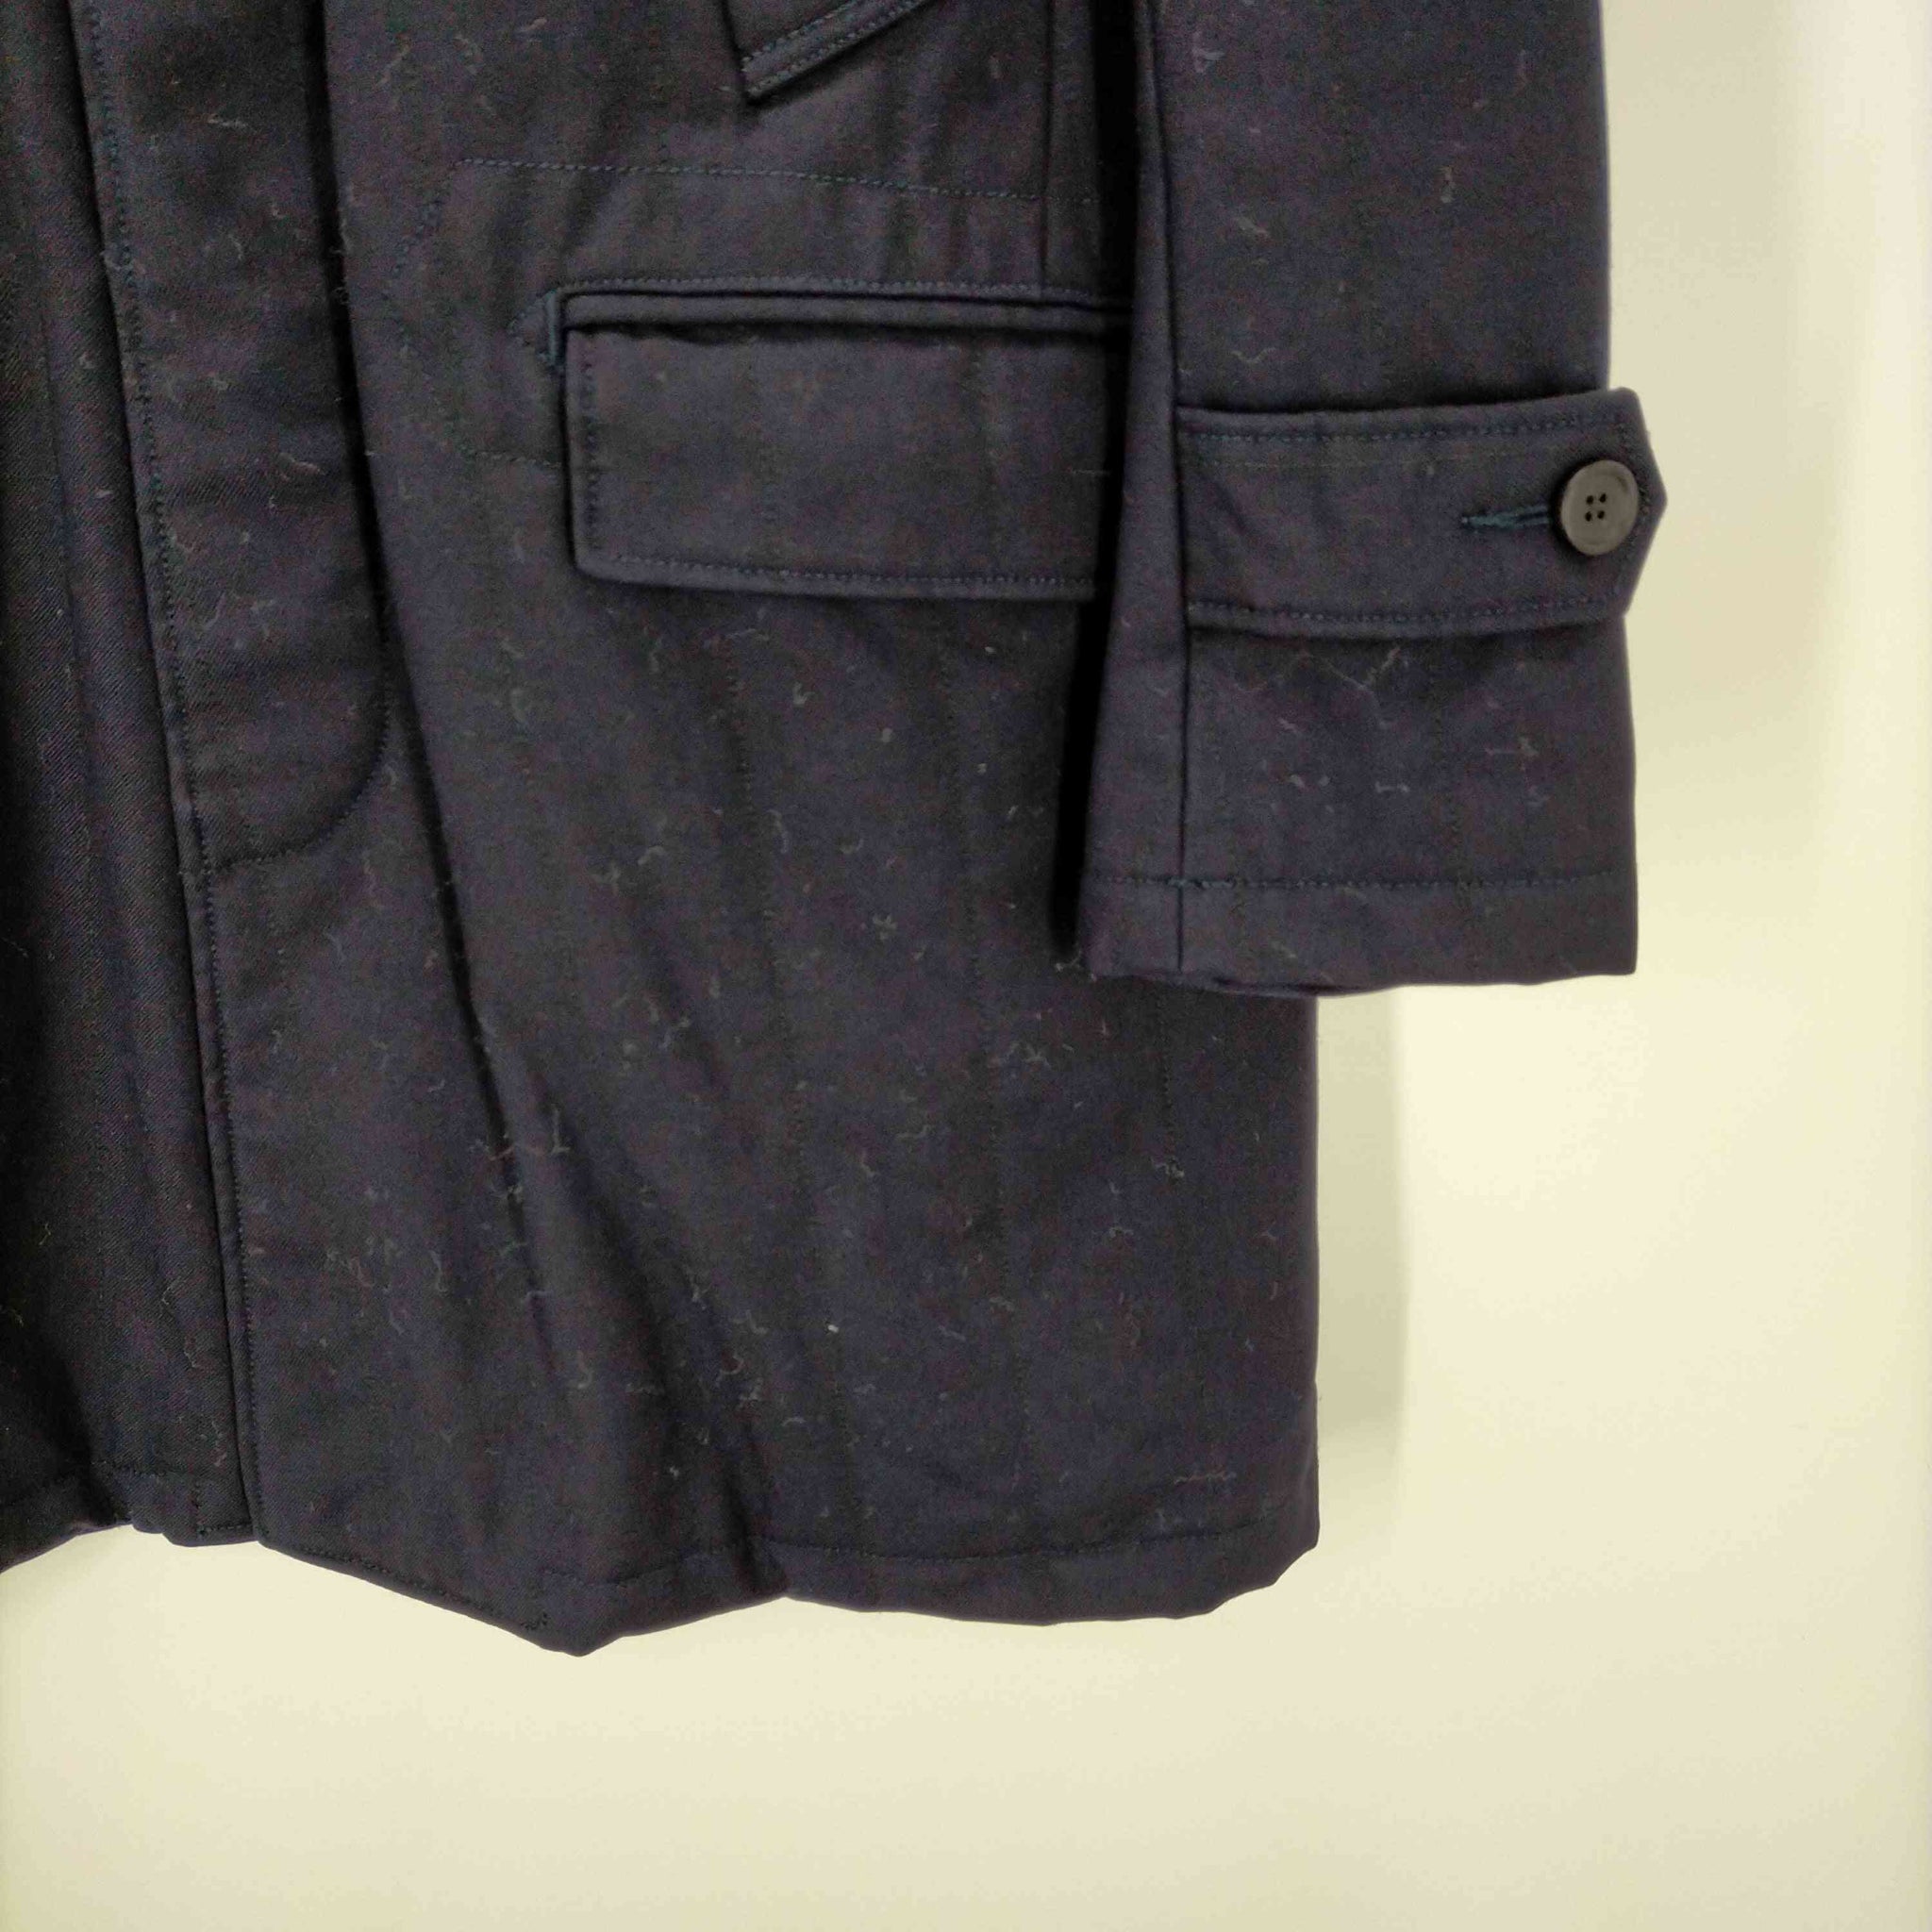 Engineered Garments(エンジニアードガーメンツ)Chesterfield Coat Uniform Serge 旧タグ